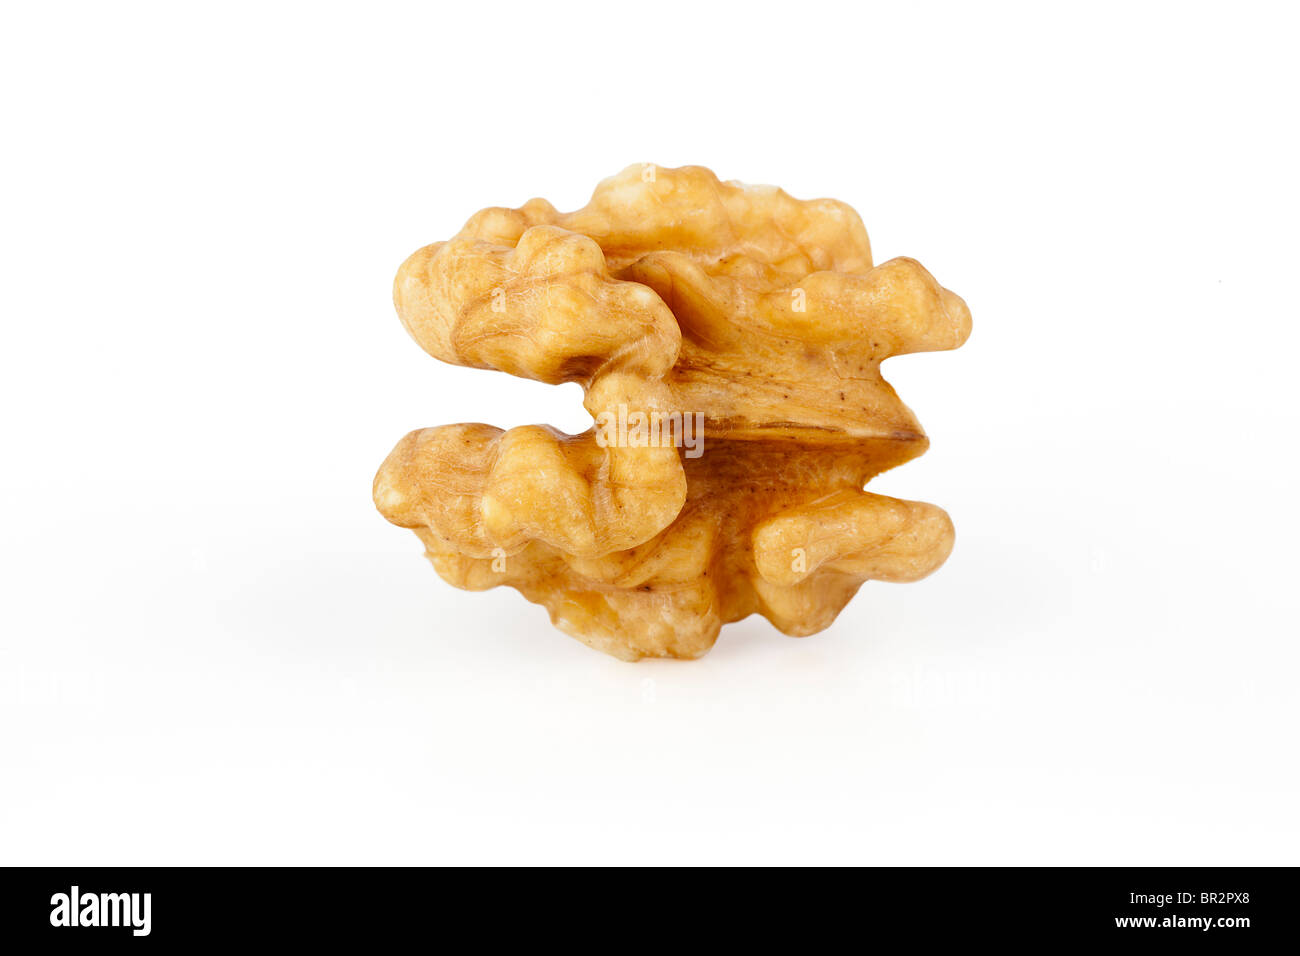 Raw shelled walnut half on white background Stock Photo